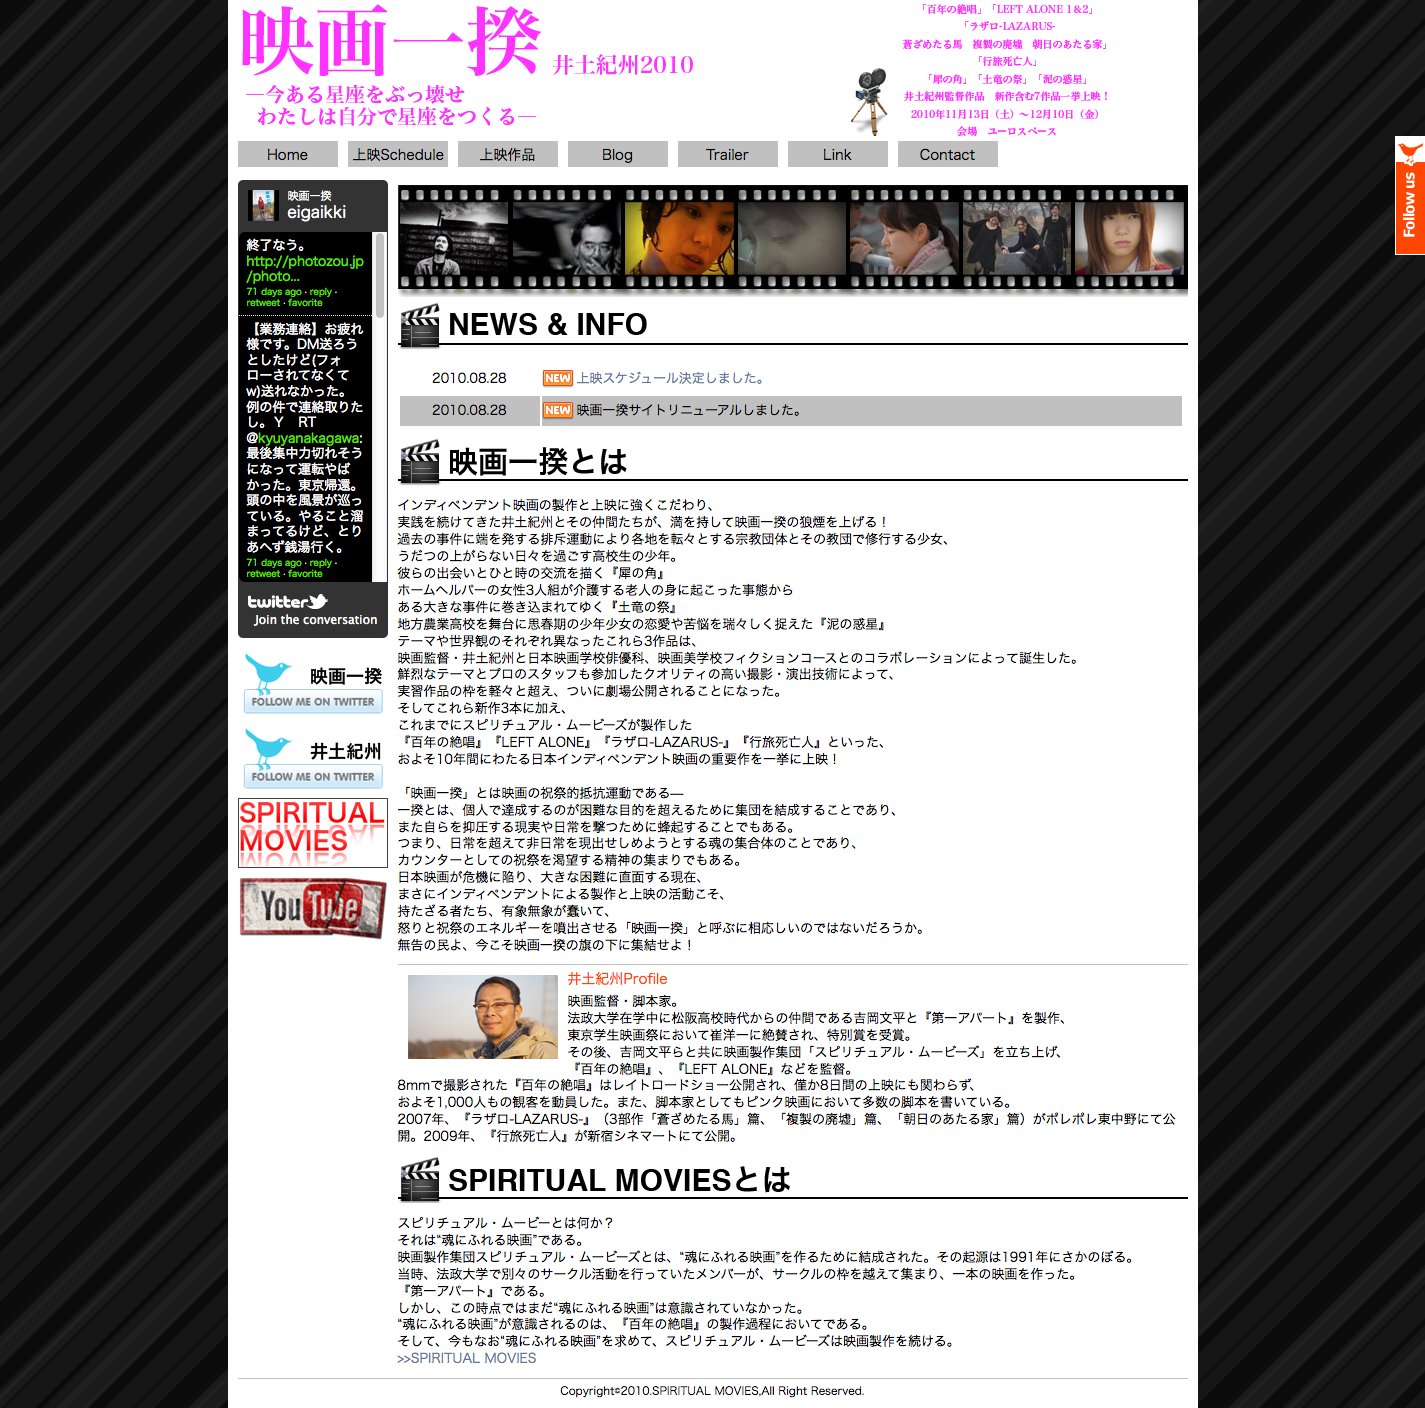 WEBサイト「映画一揆 井土紀州2010」